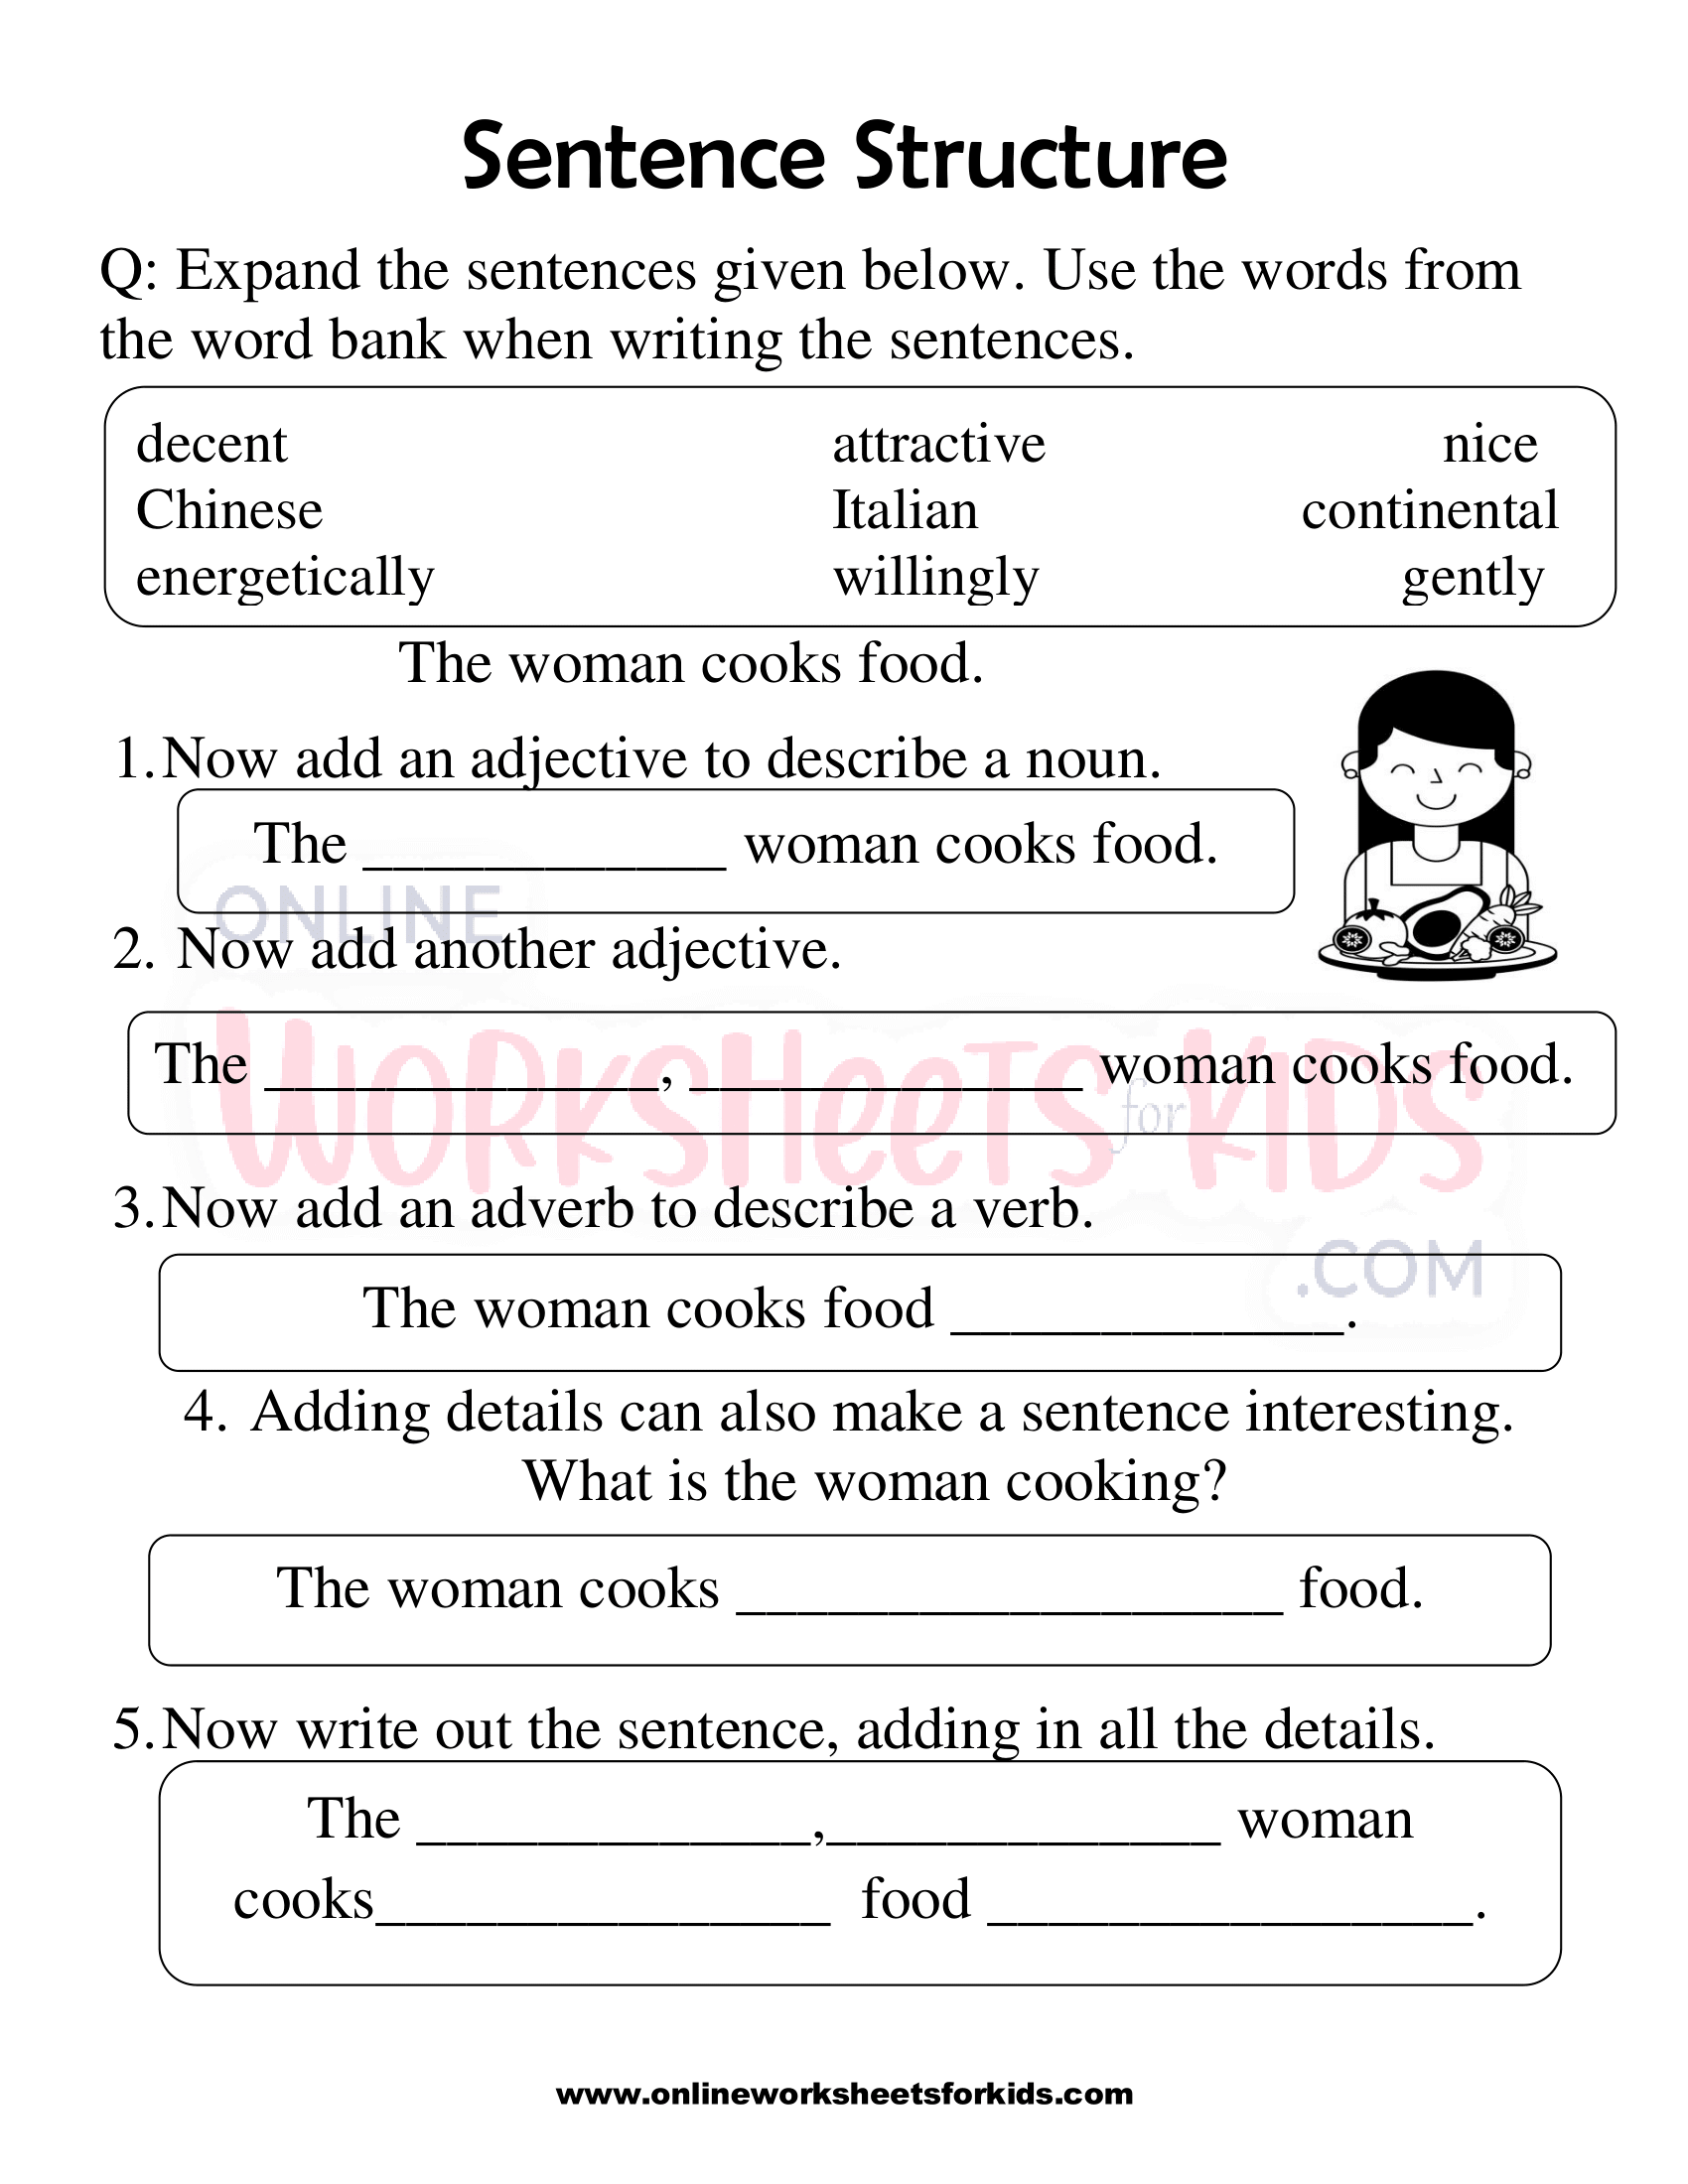 Sentence Structure Worksheets For Grade 5